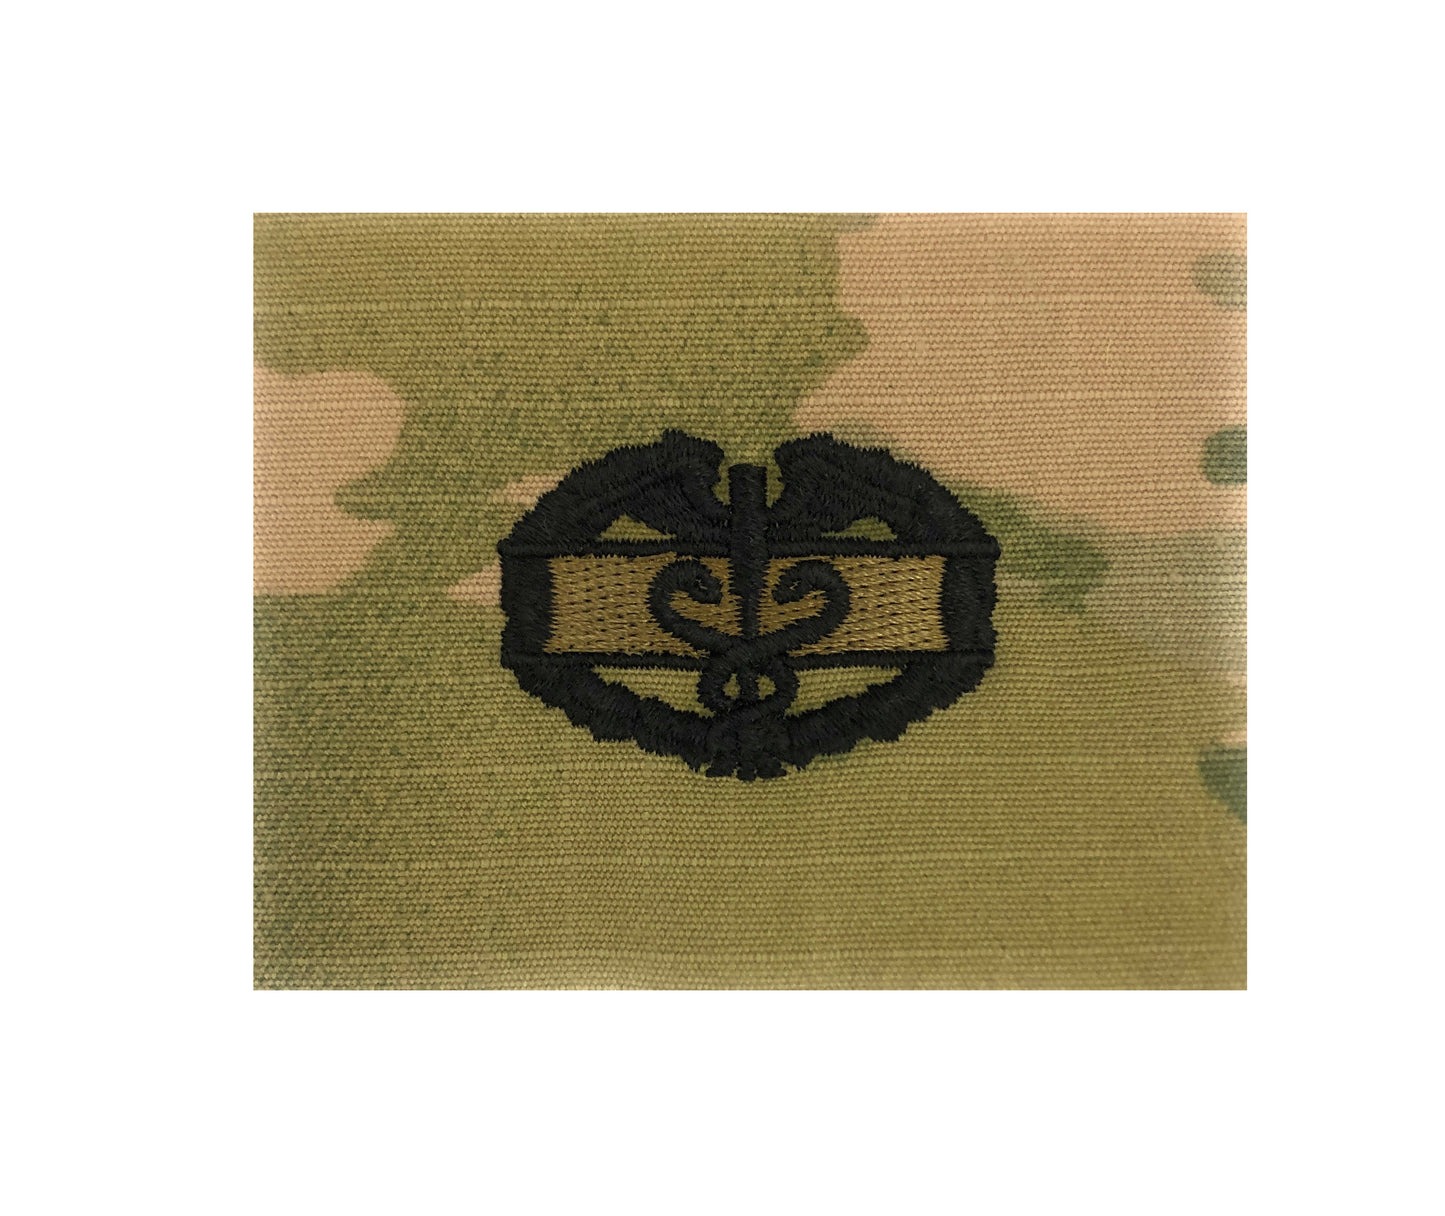 U.S. Army Combat Medical 1AWD OCP Sew-on Badge